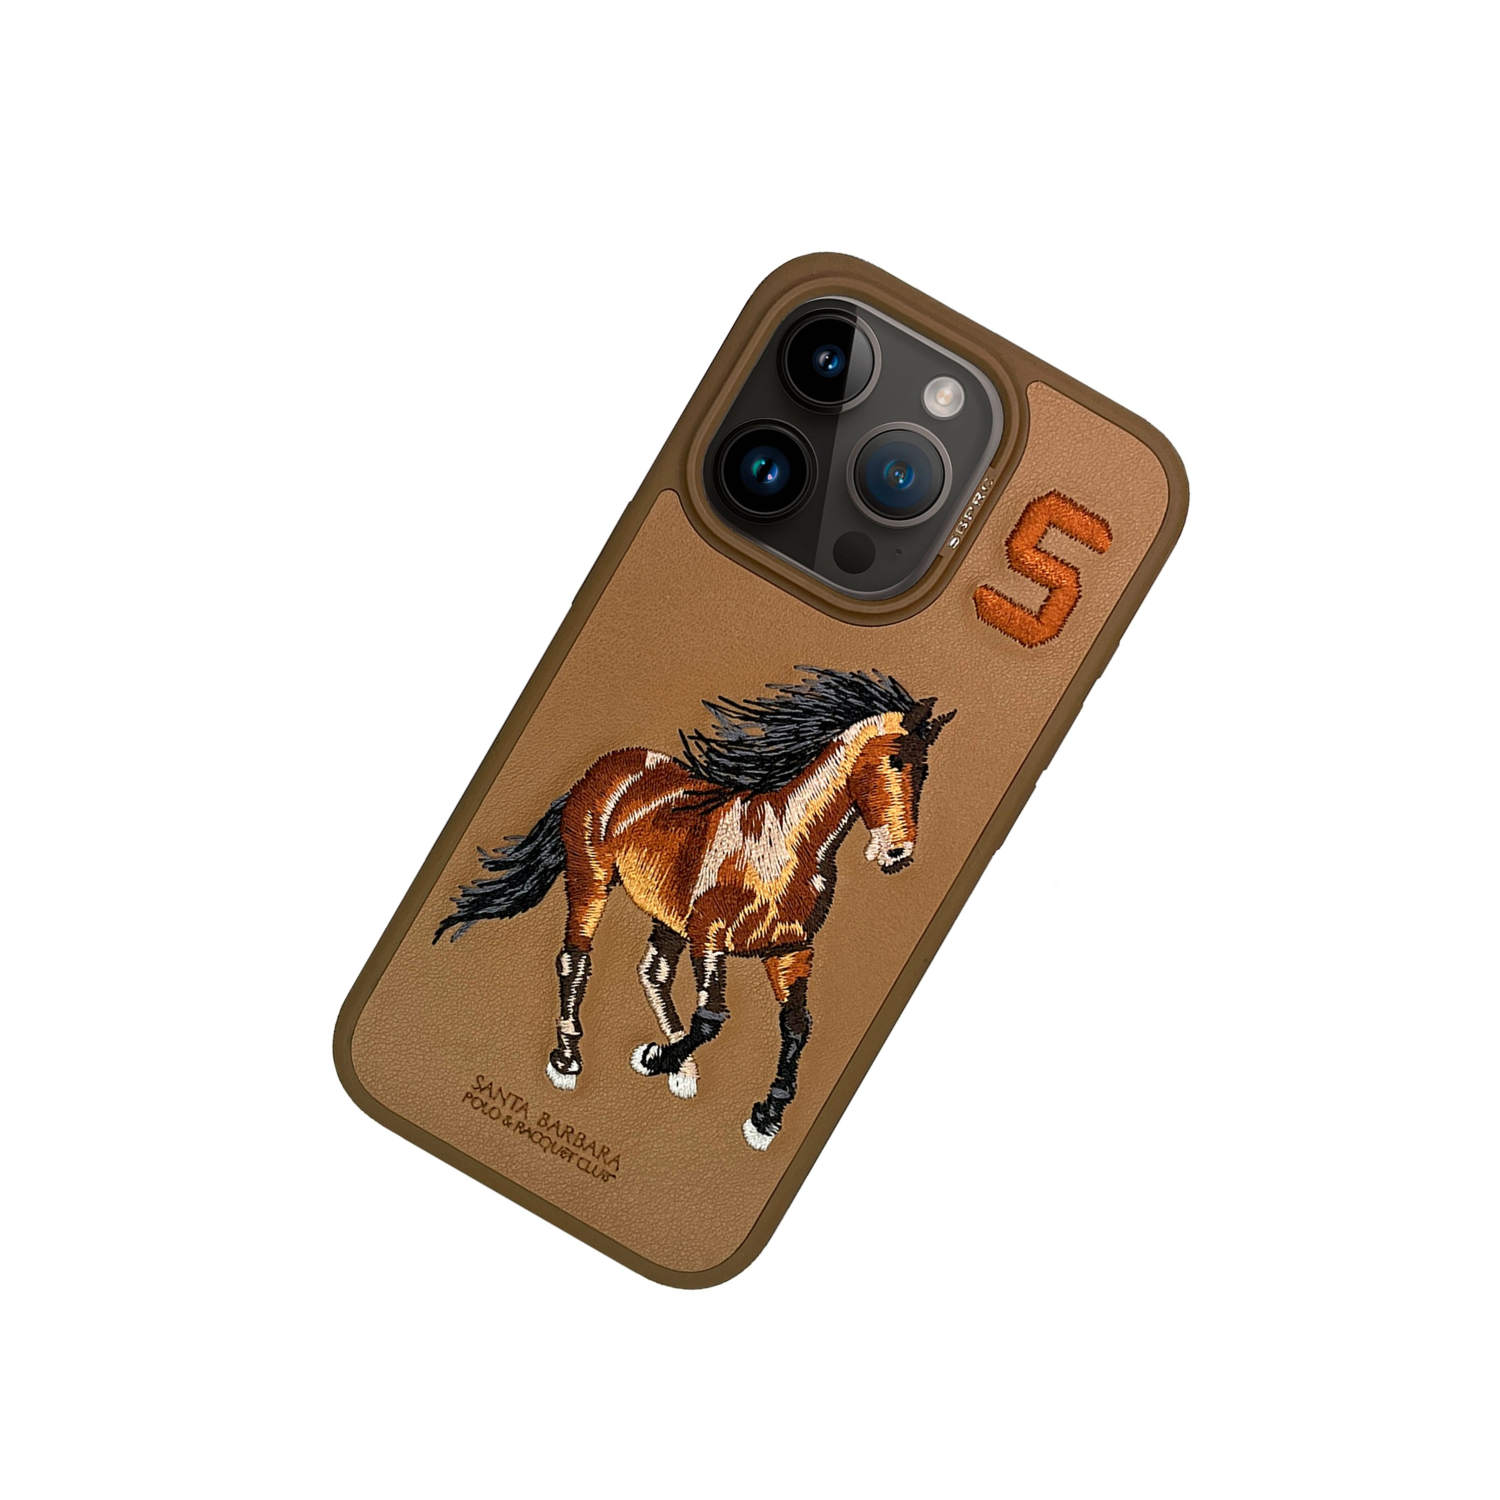 Santa Barbara Boris Series Embodied Horse Leather Case for iPhone 13 Series